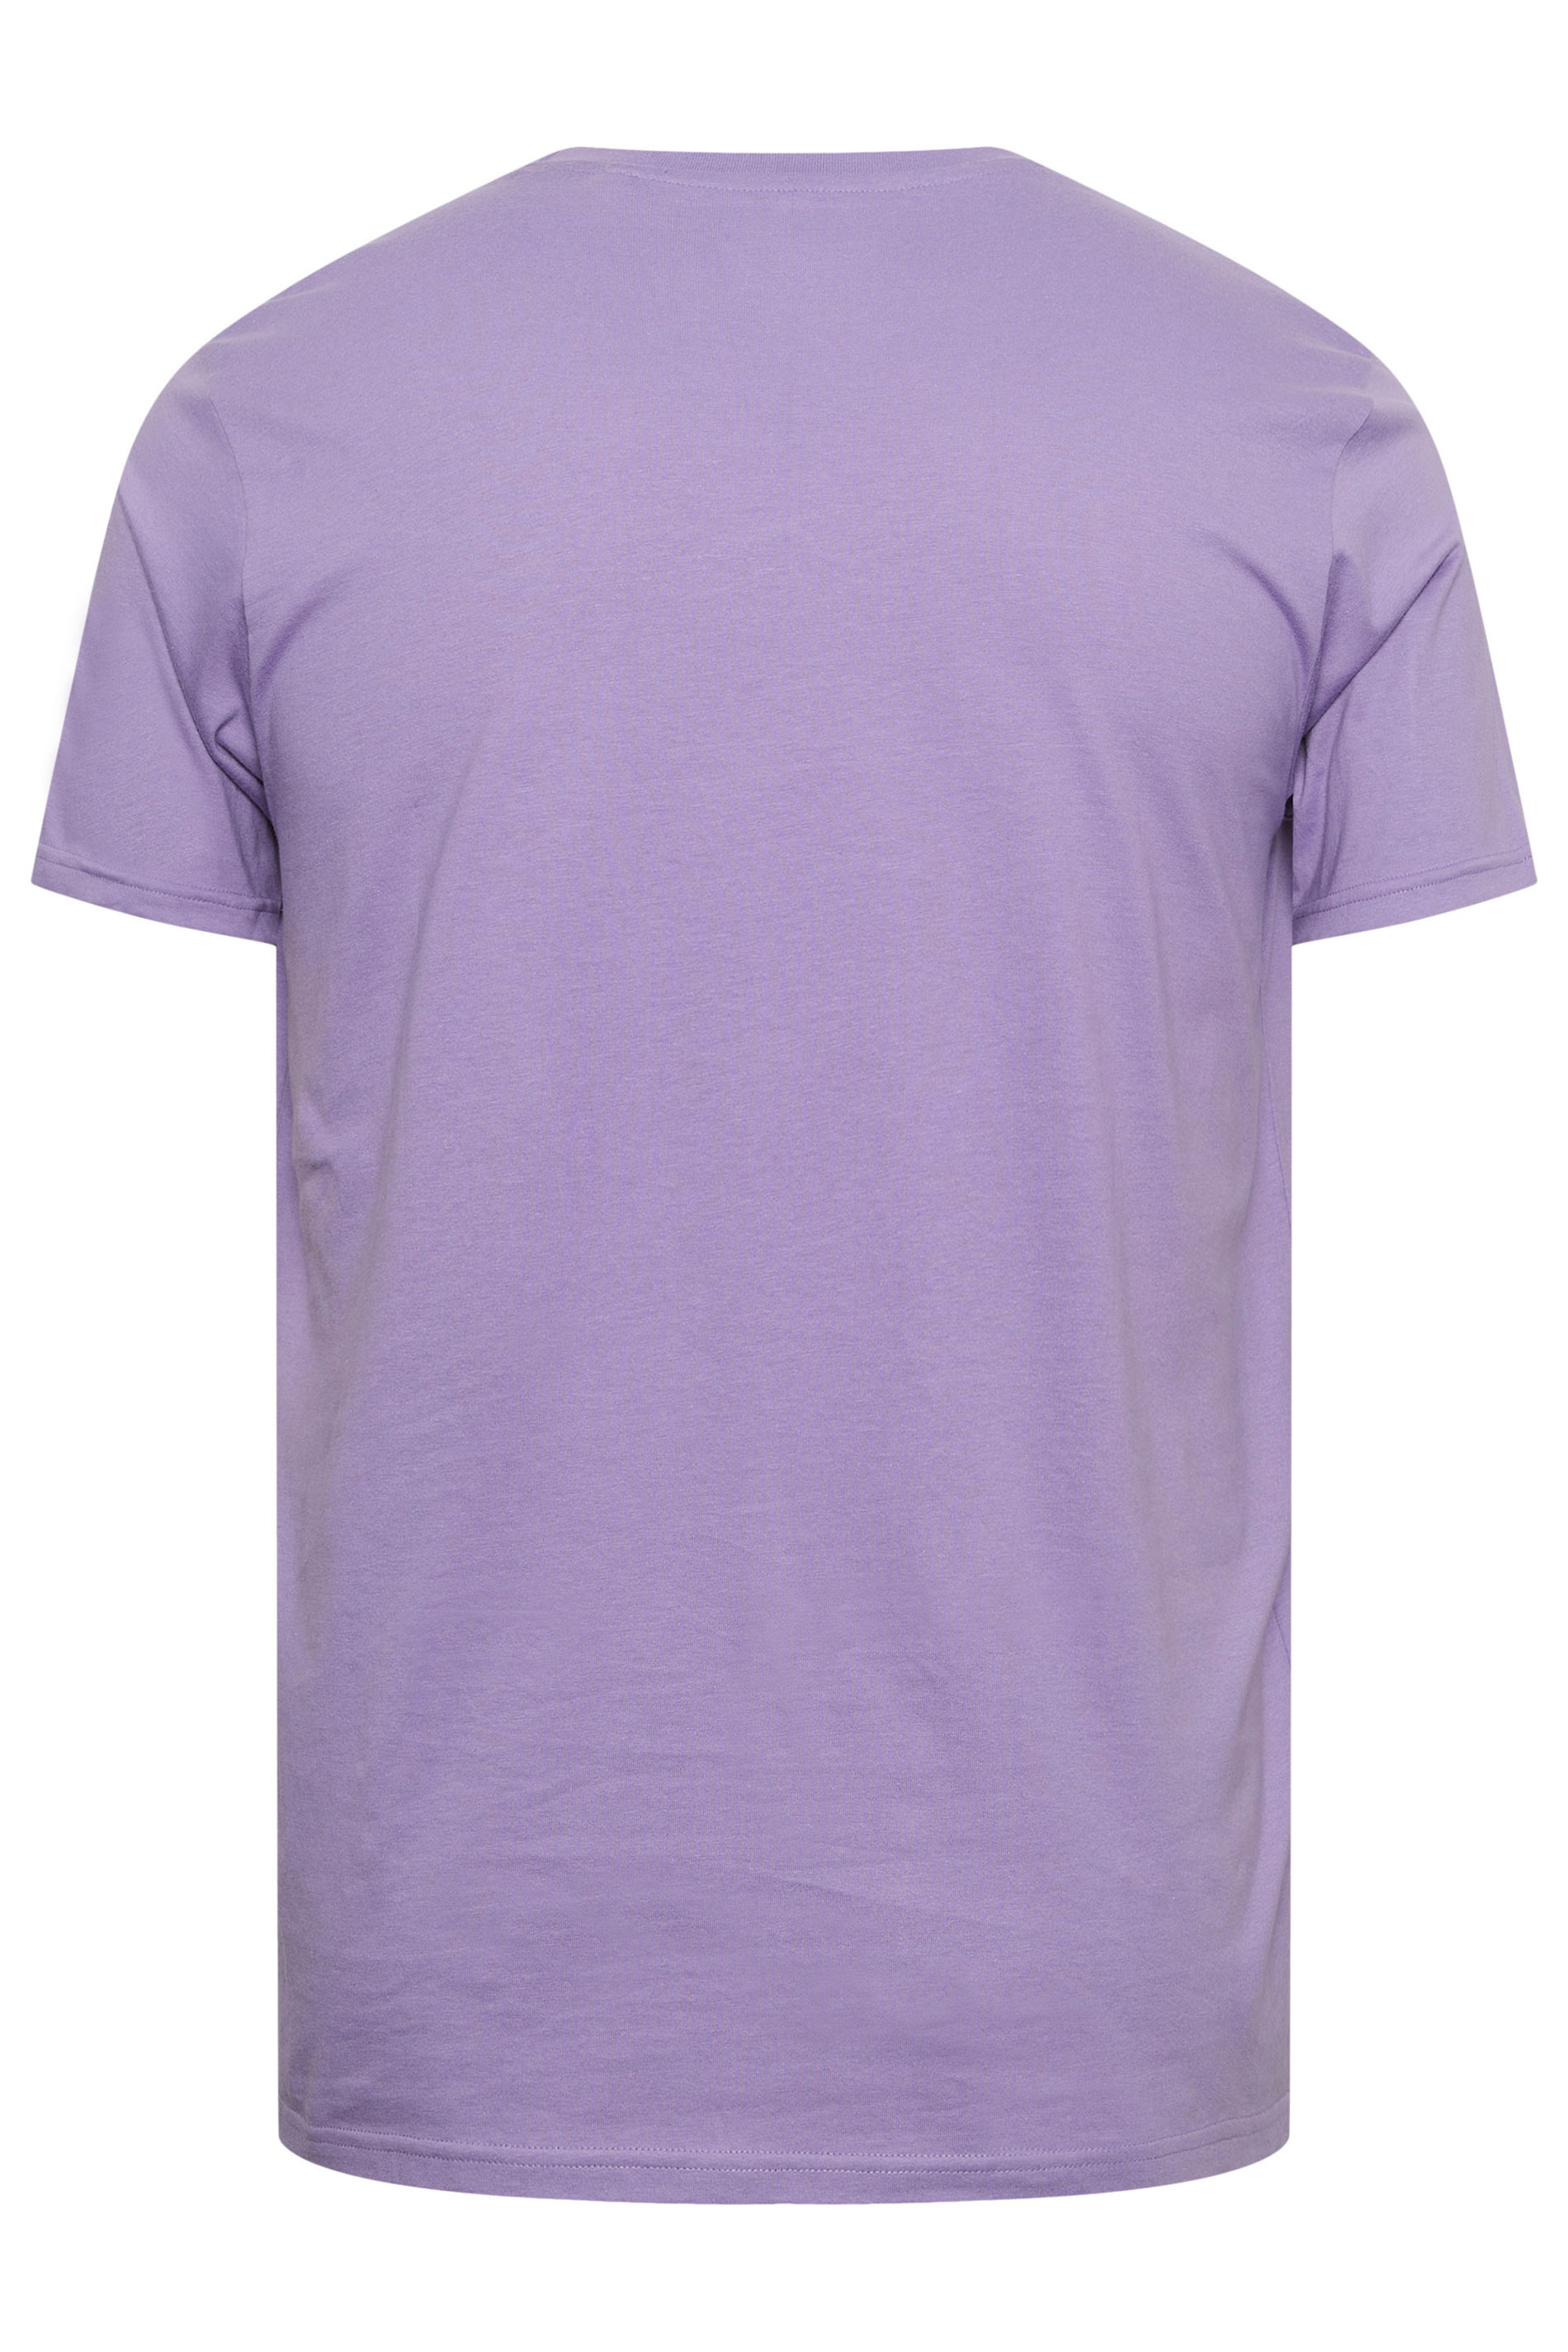 BadRhino Big & Tall Chalk Violet Purple Core T-Shirt | BadRhino 3